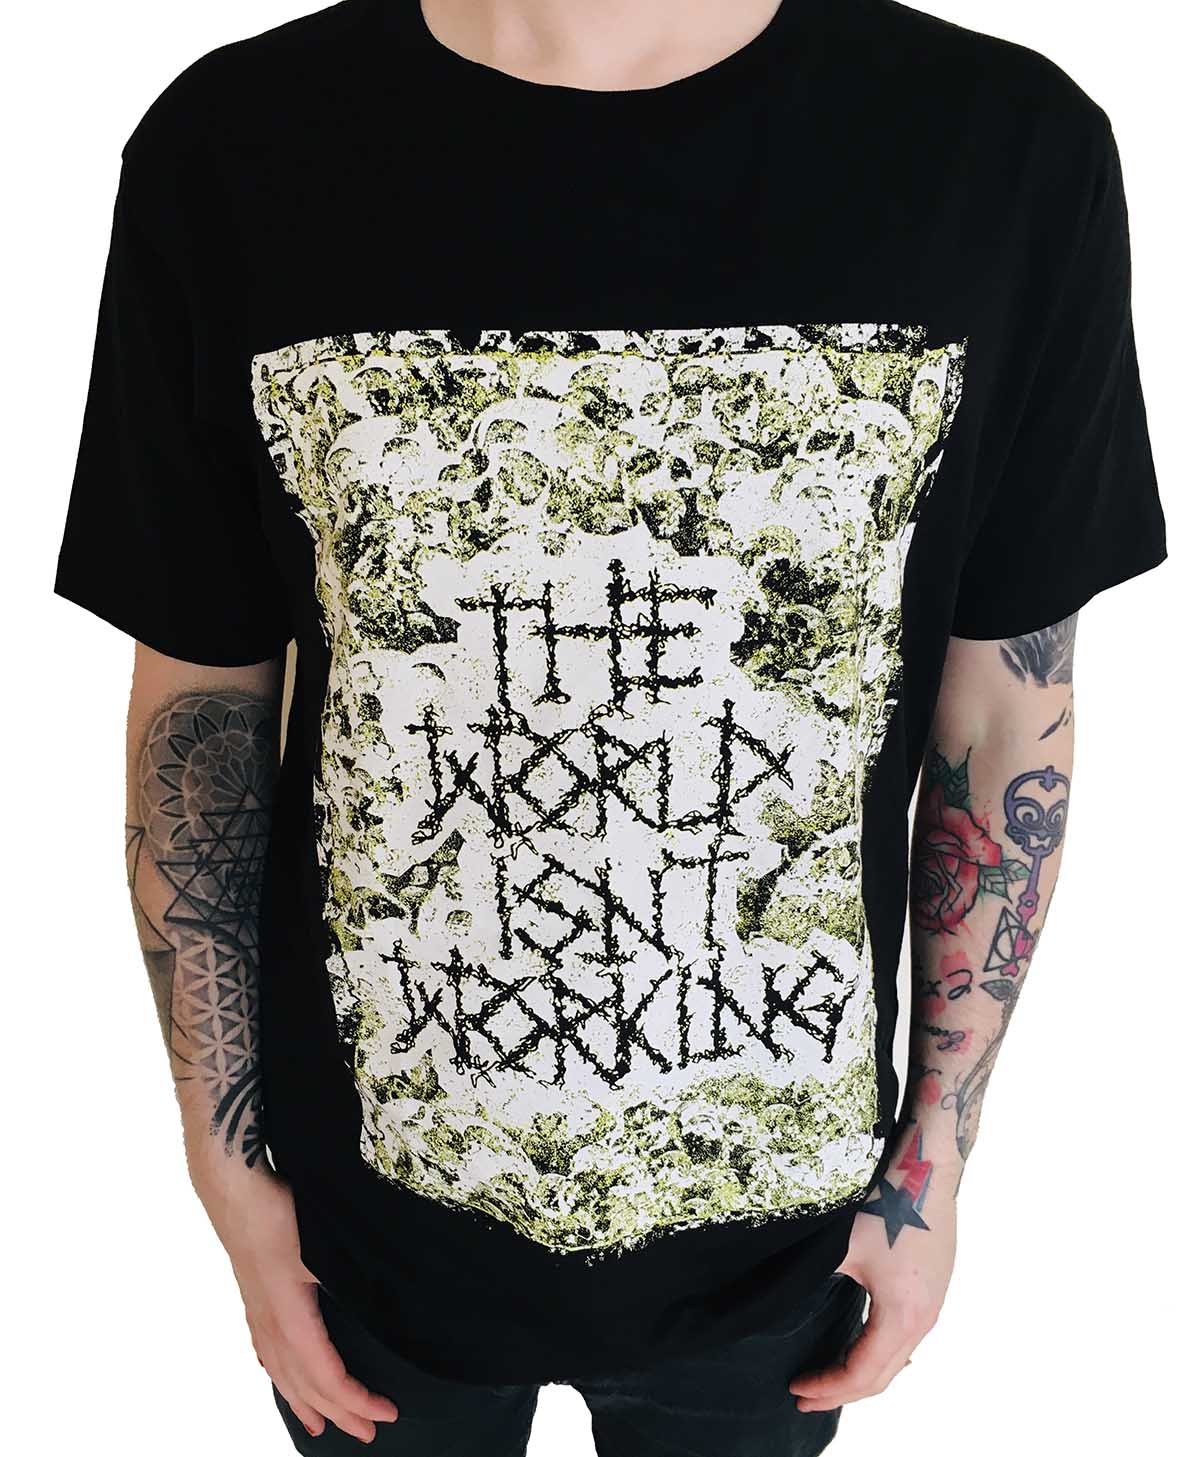 Earache "The World Isn't Working - White Skull" Earth Positive T shirt designed by Mark Titchner